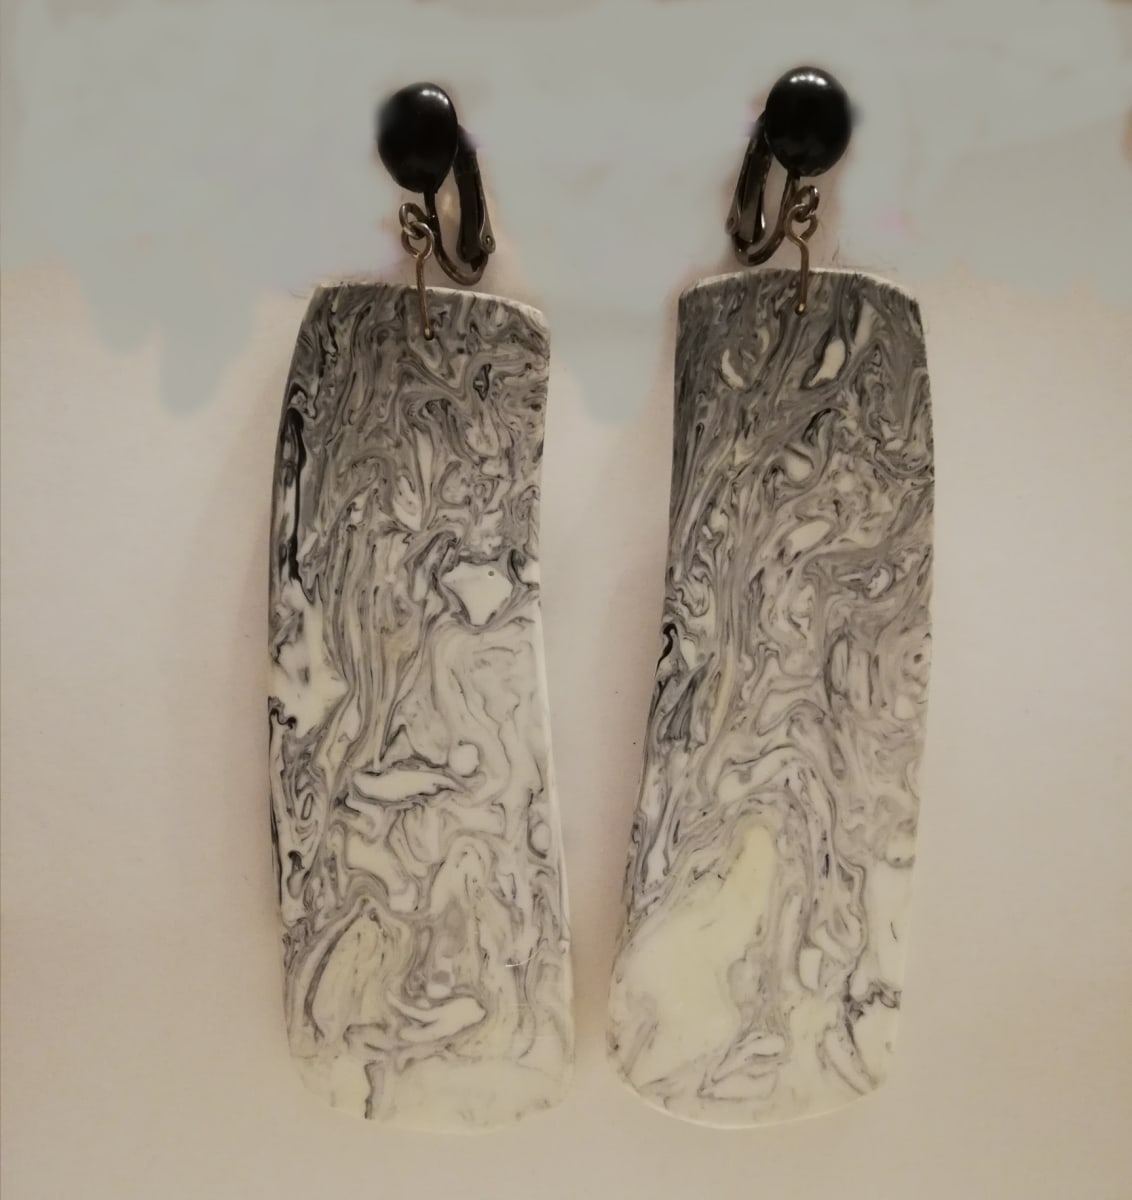 Black and white marbleized 'slice' earrings  Image: Black and white marbleized 'slice' earrings black stainless steel clips